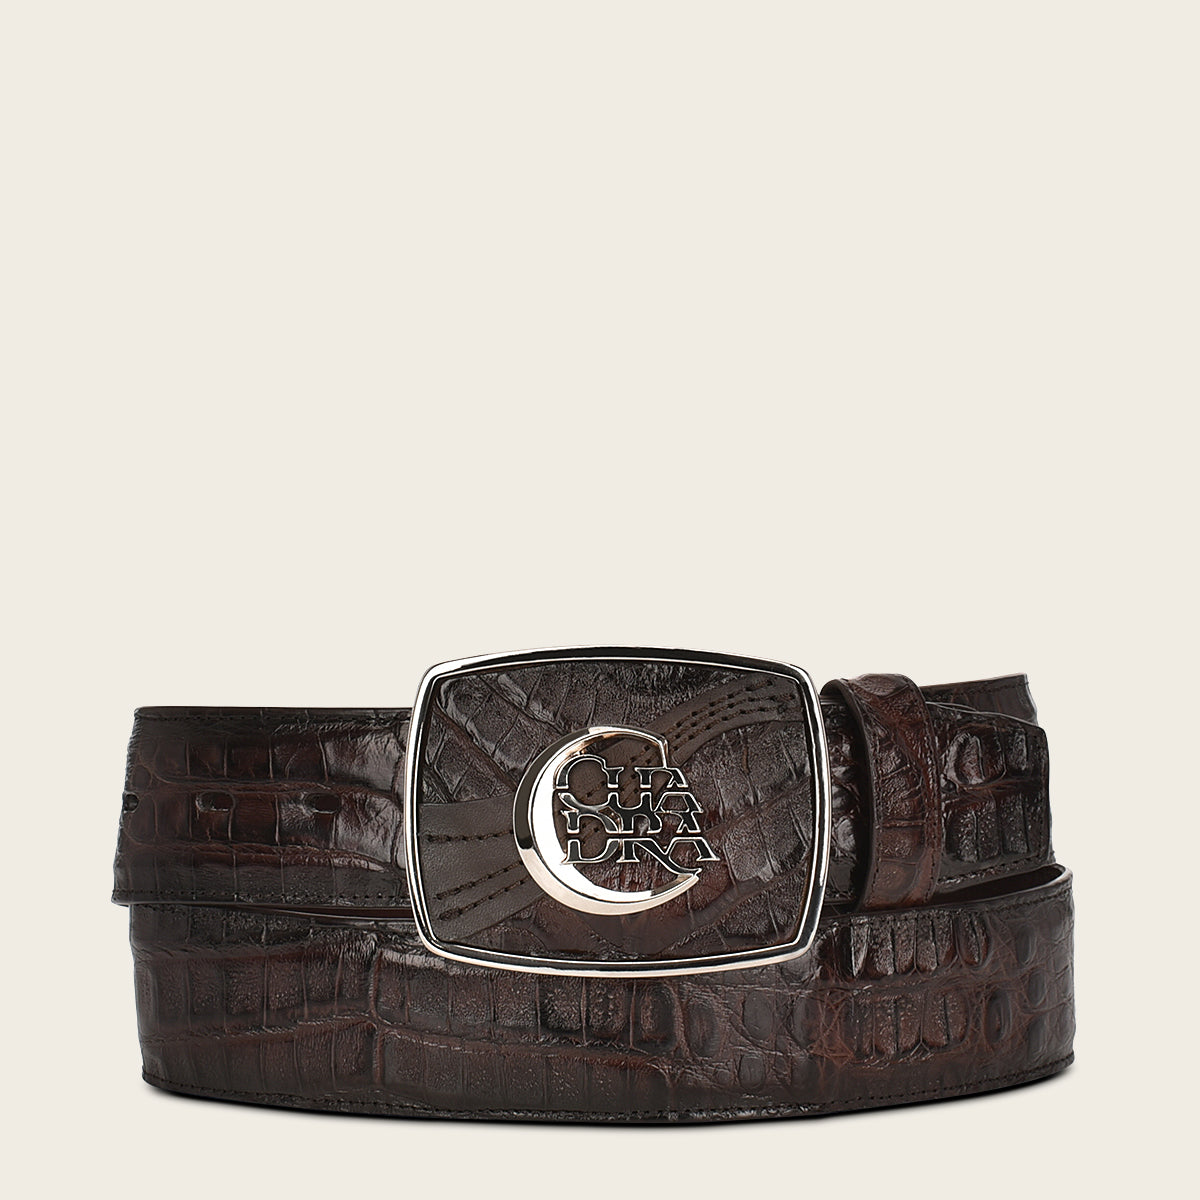 Engraved dark brown high exotic leather western belt with Cuadra monogram